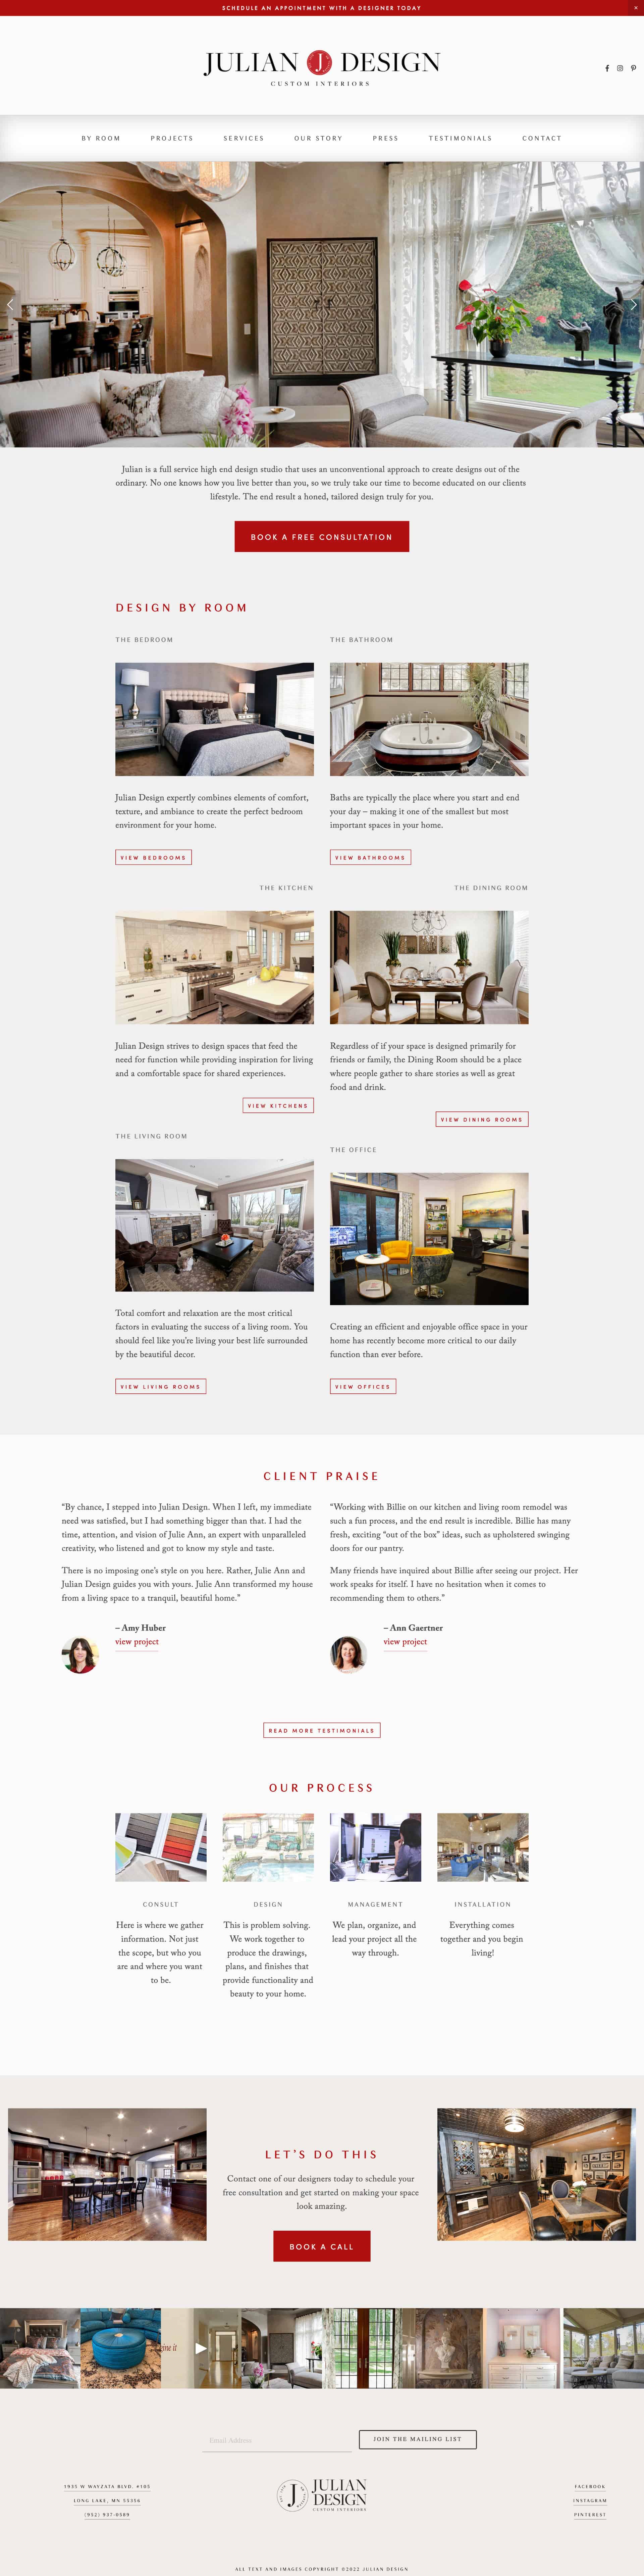 Julian Design Custom Interiors Website Full